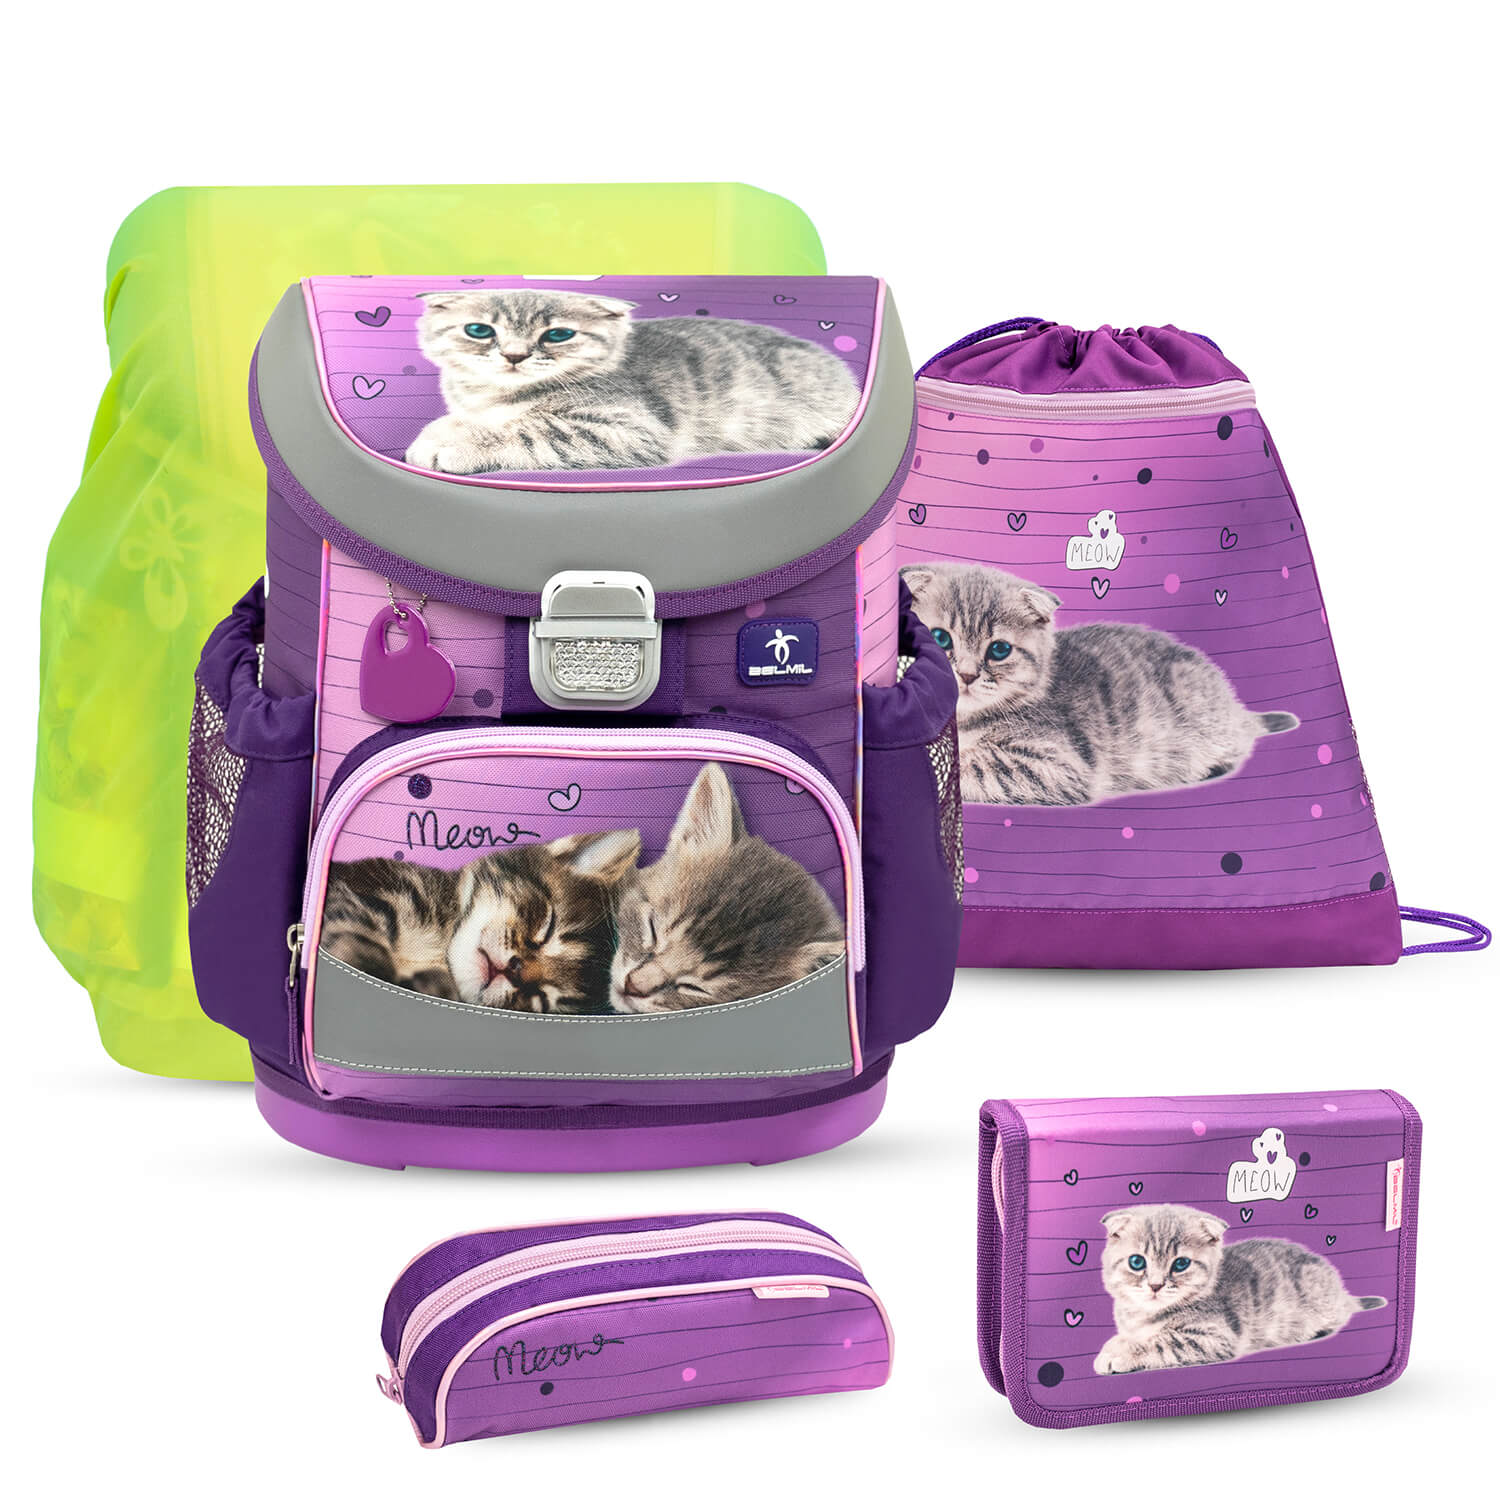 Mini-Fit Little Caty schoolbag set 5 pcs